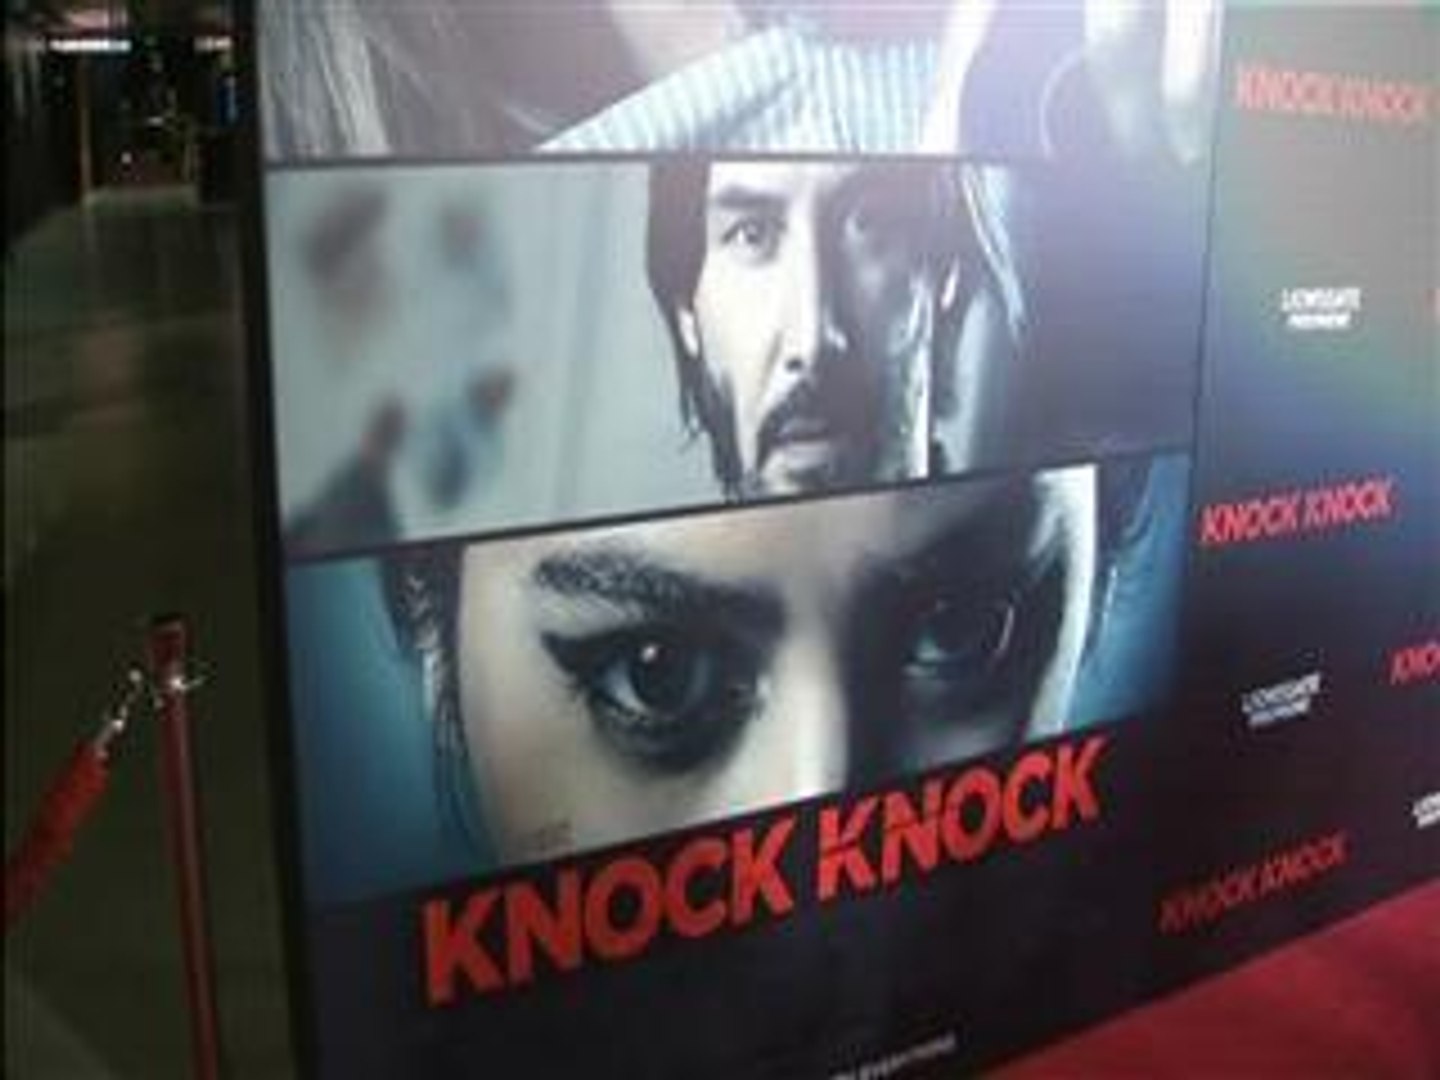 Knock Knock Full Movie Dailymotion